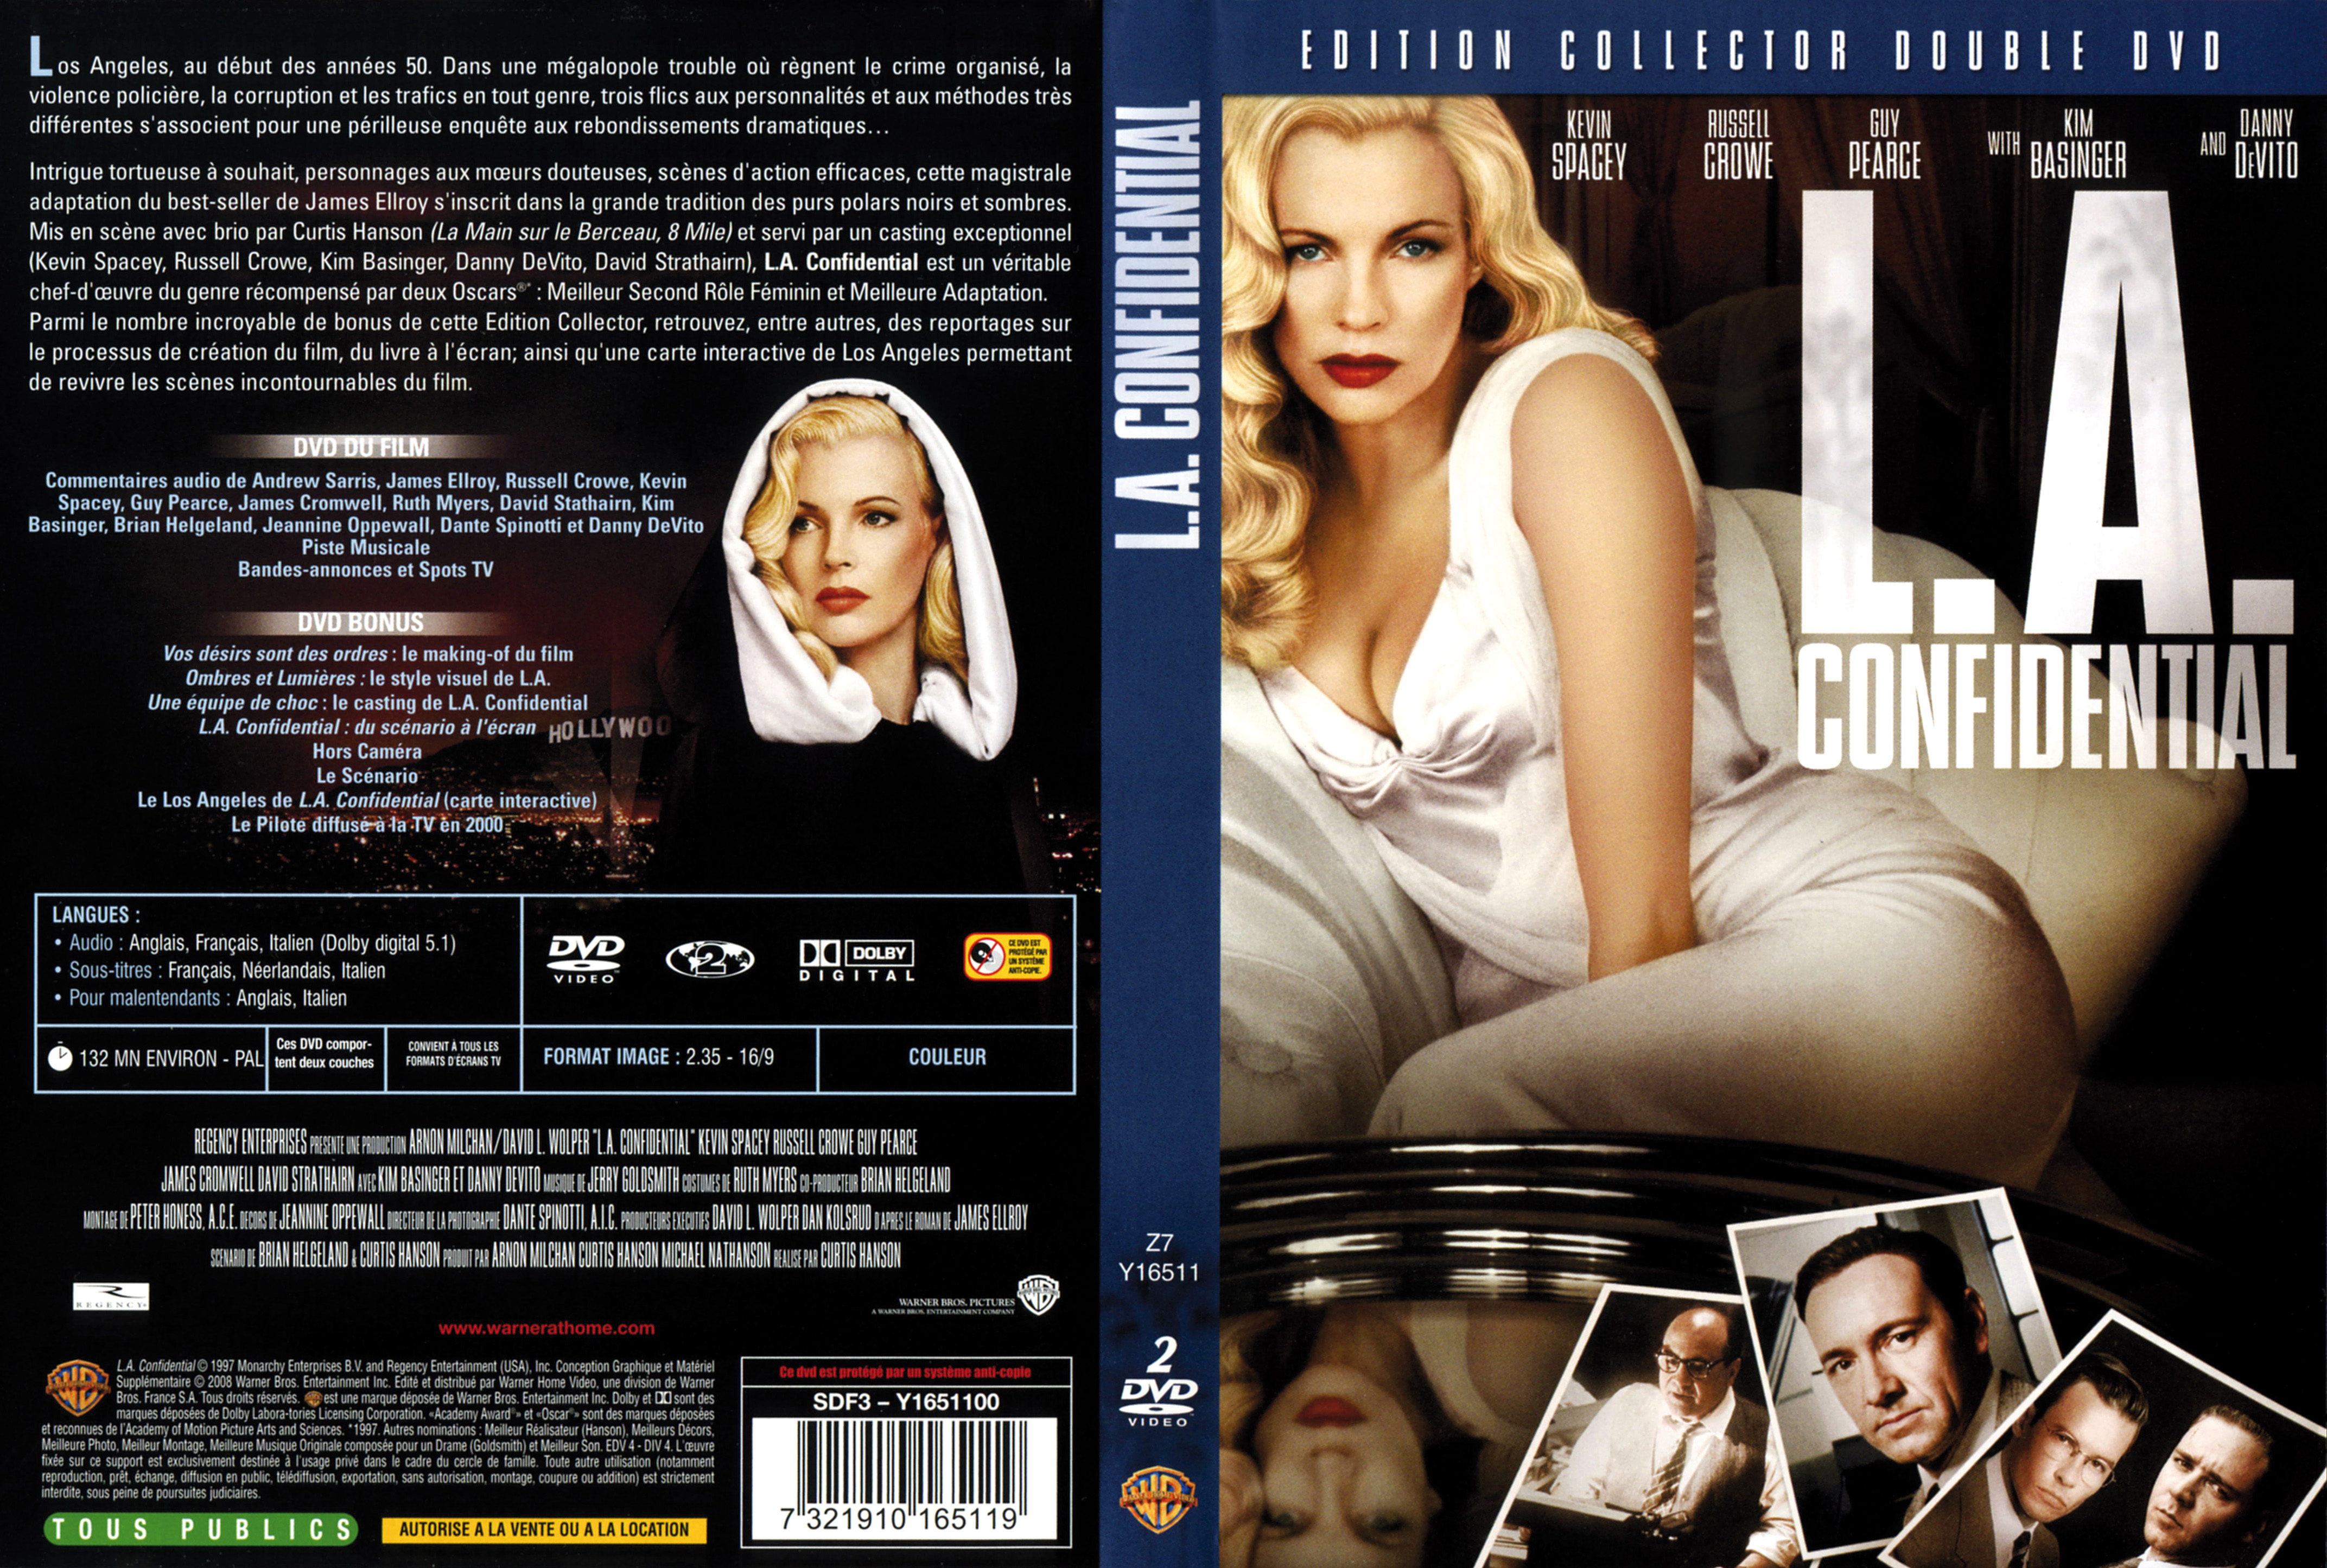 Jaquette DVD LA Confidential v2